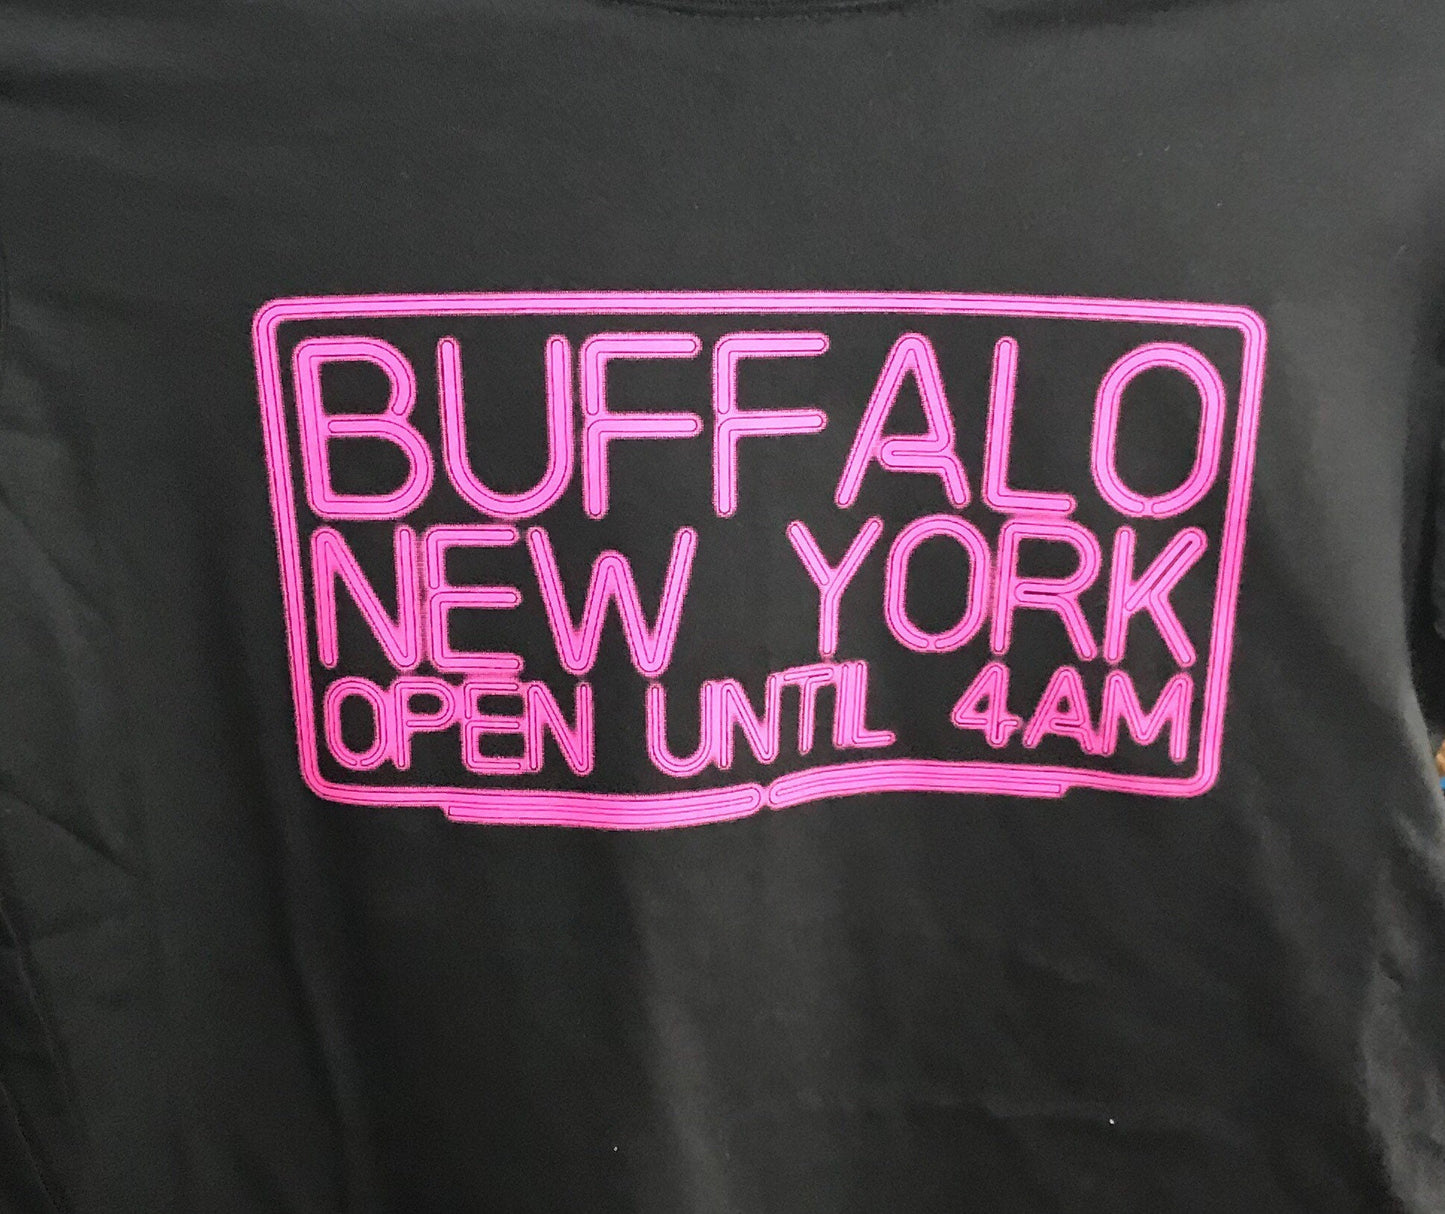 Buffalo NY Open Until 4am Bar Crawl T-shirt